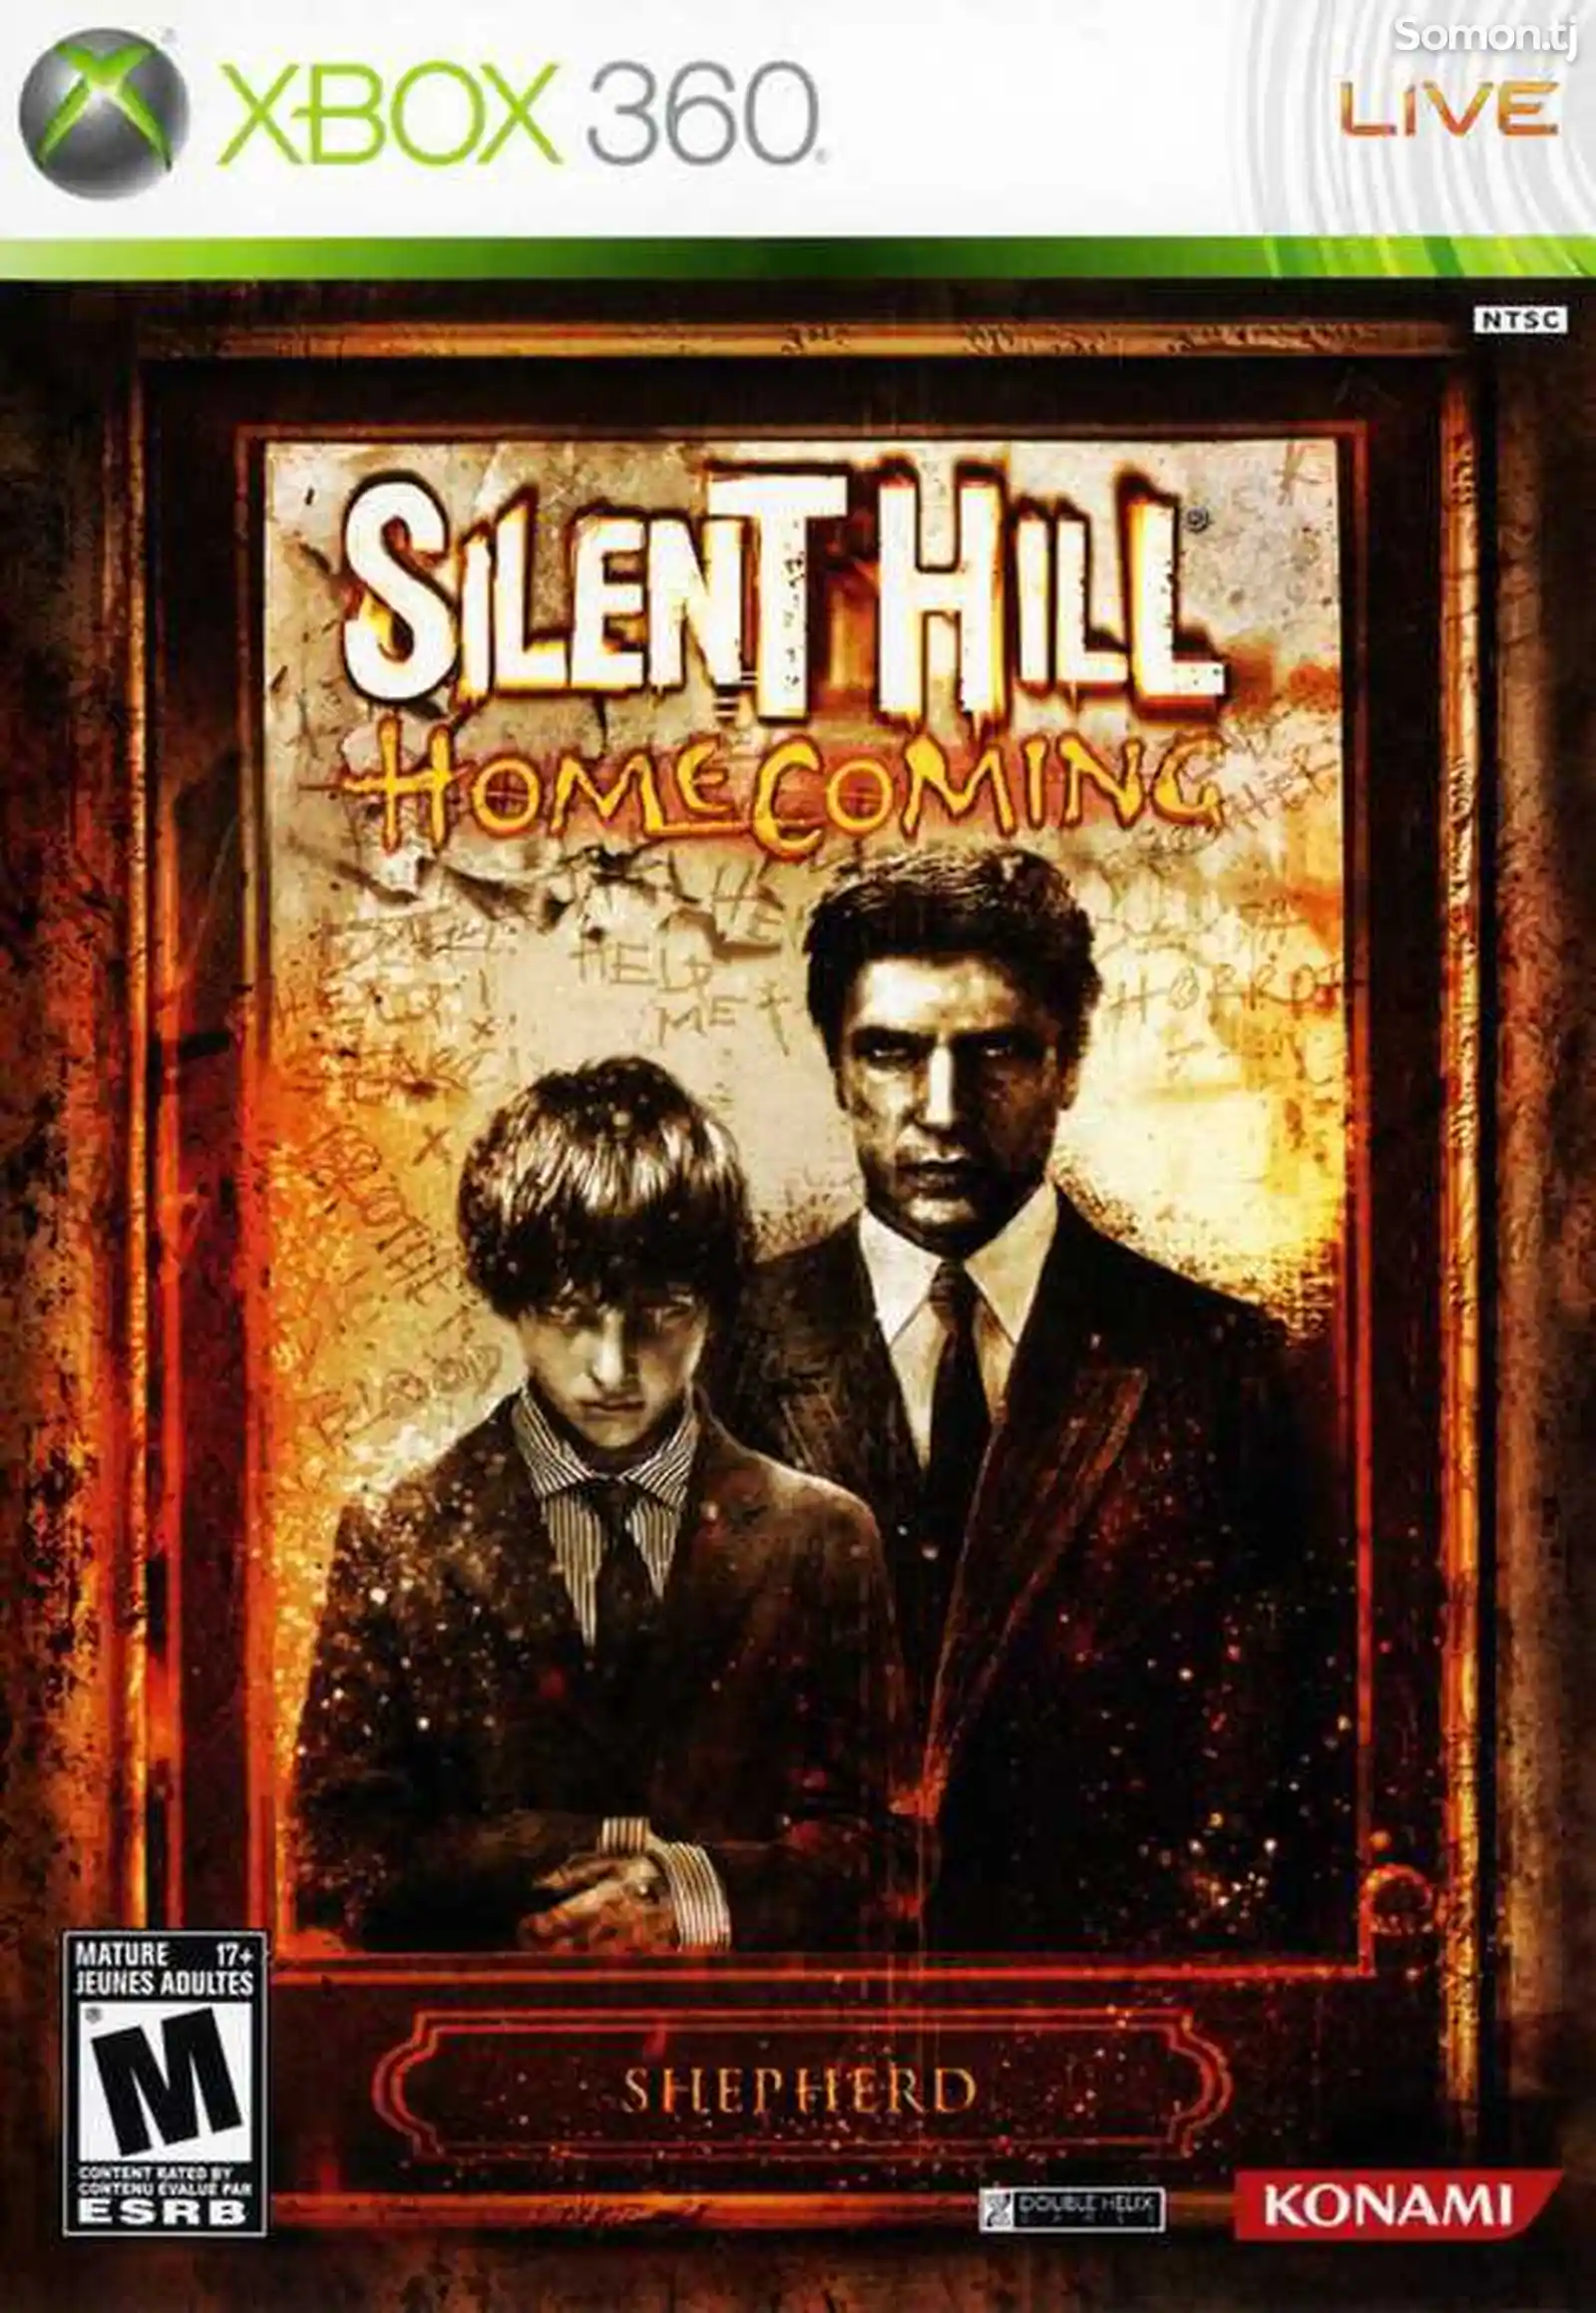 Игра Silent hill homecoming для прошитых Xbox 360